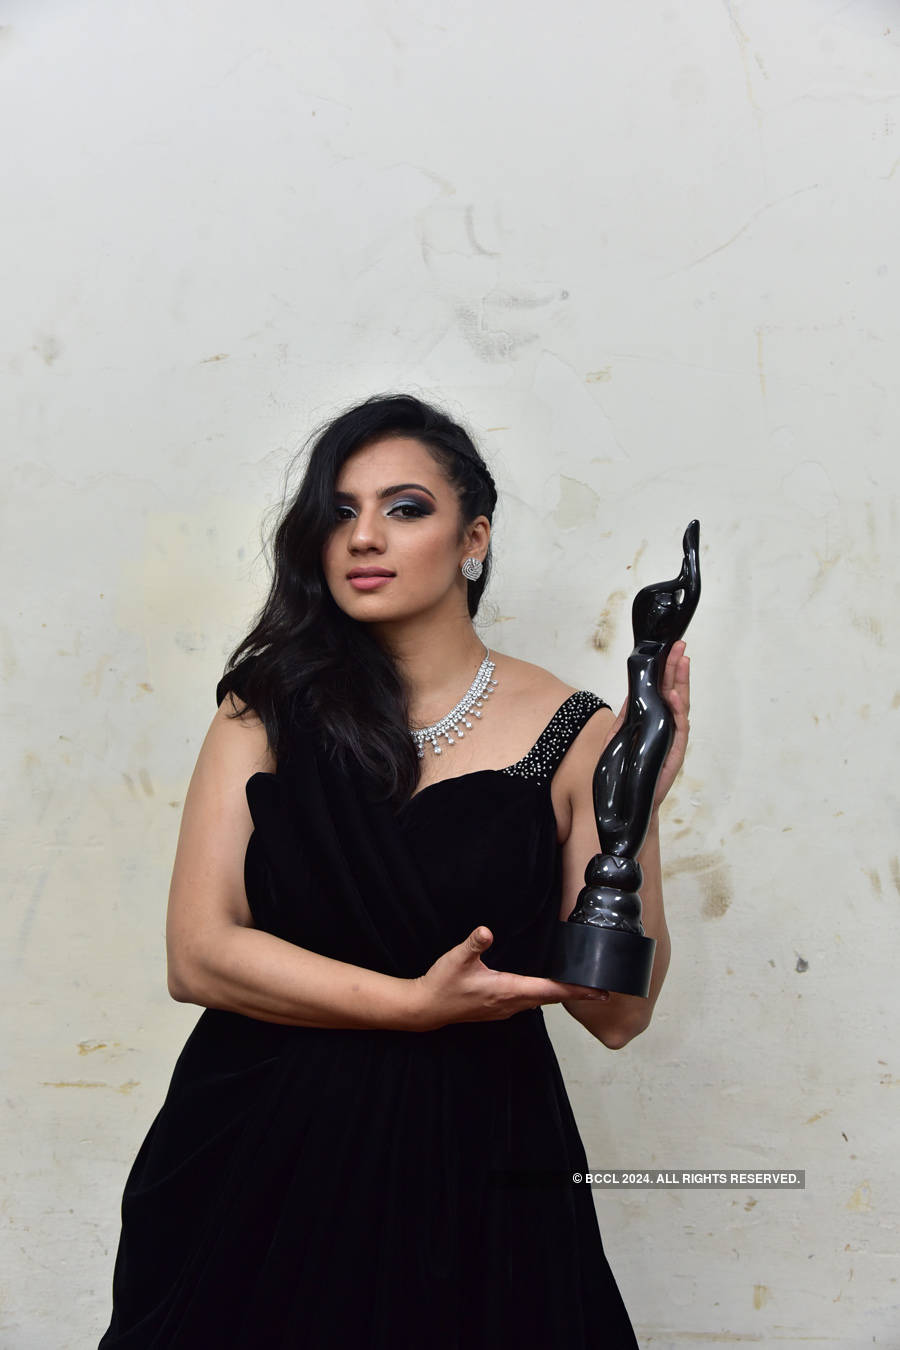 Meet the Sandalwood winners of the 66th Yamaha Fascino Filmfare Awards (South) 2019